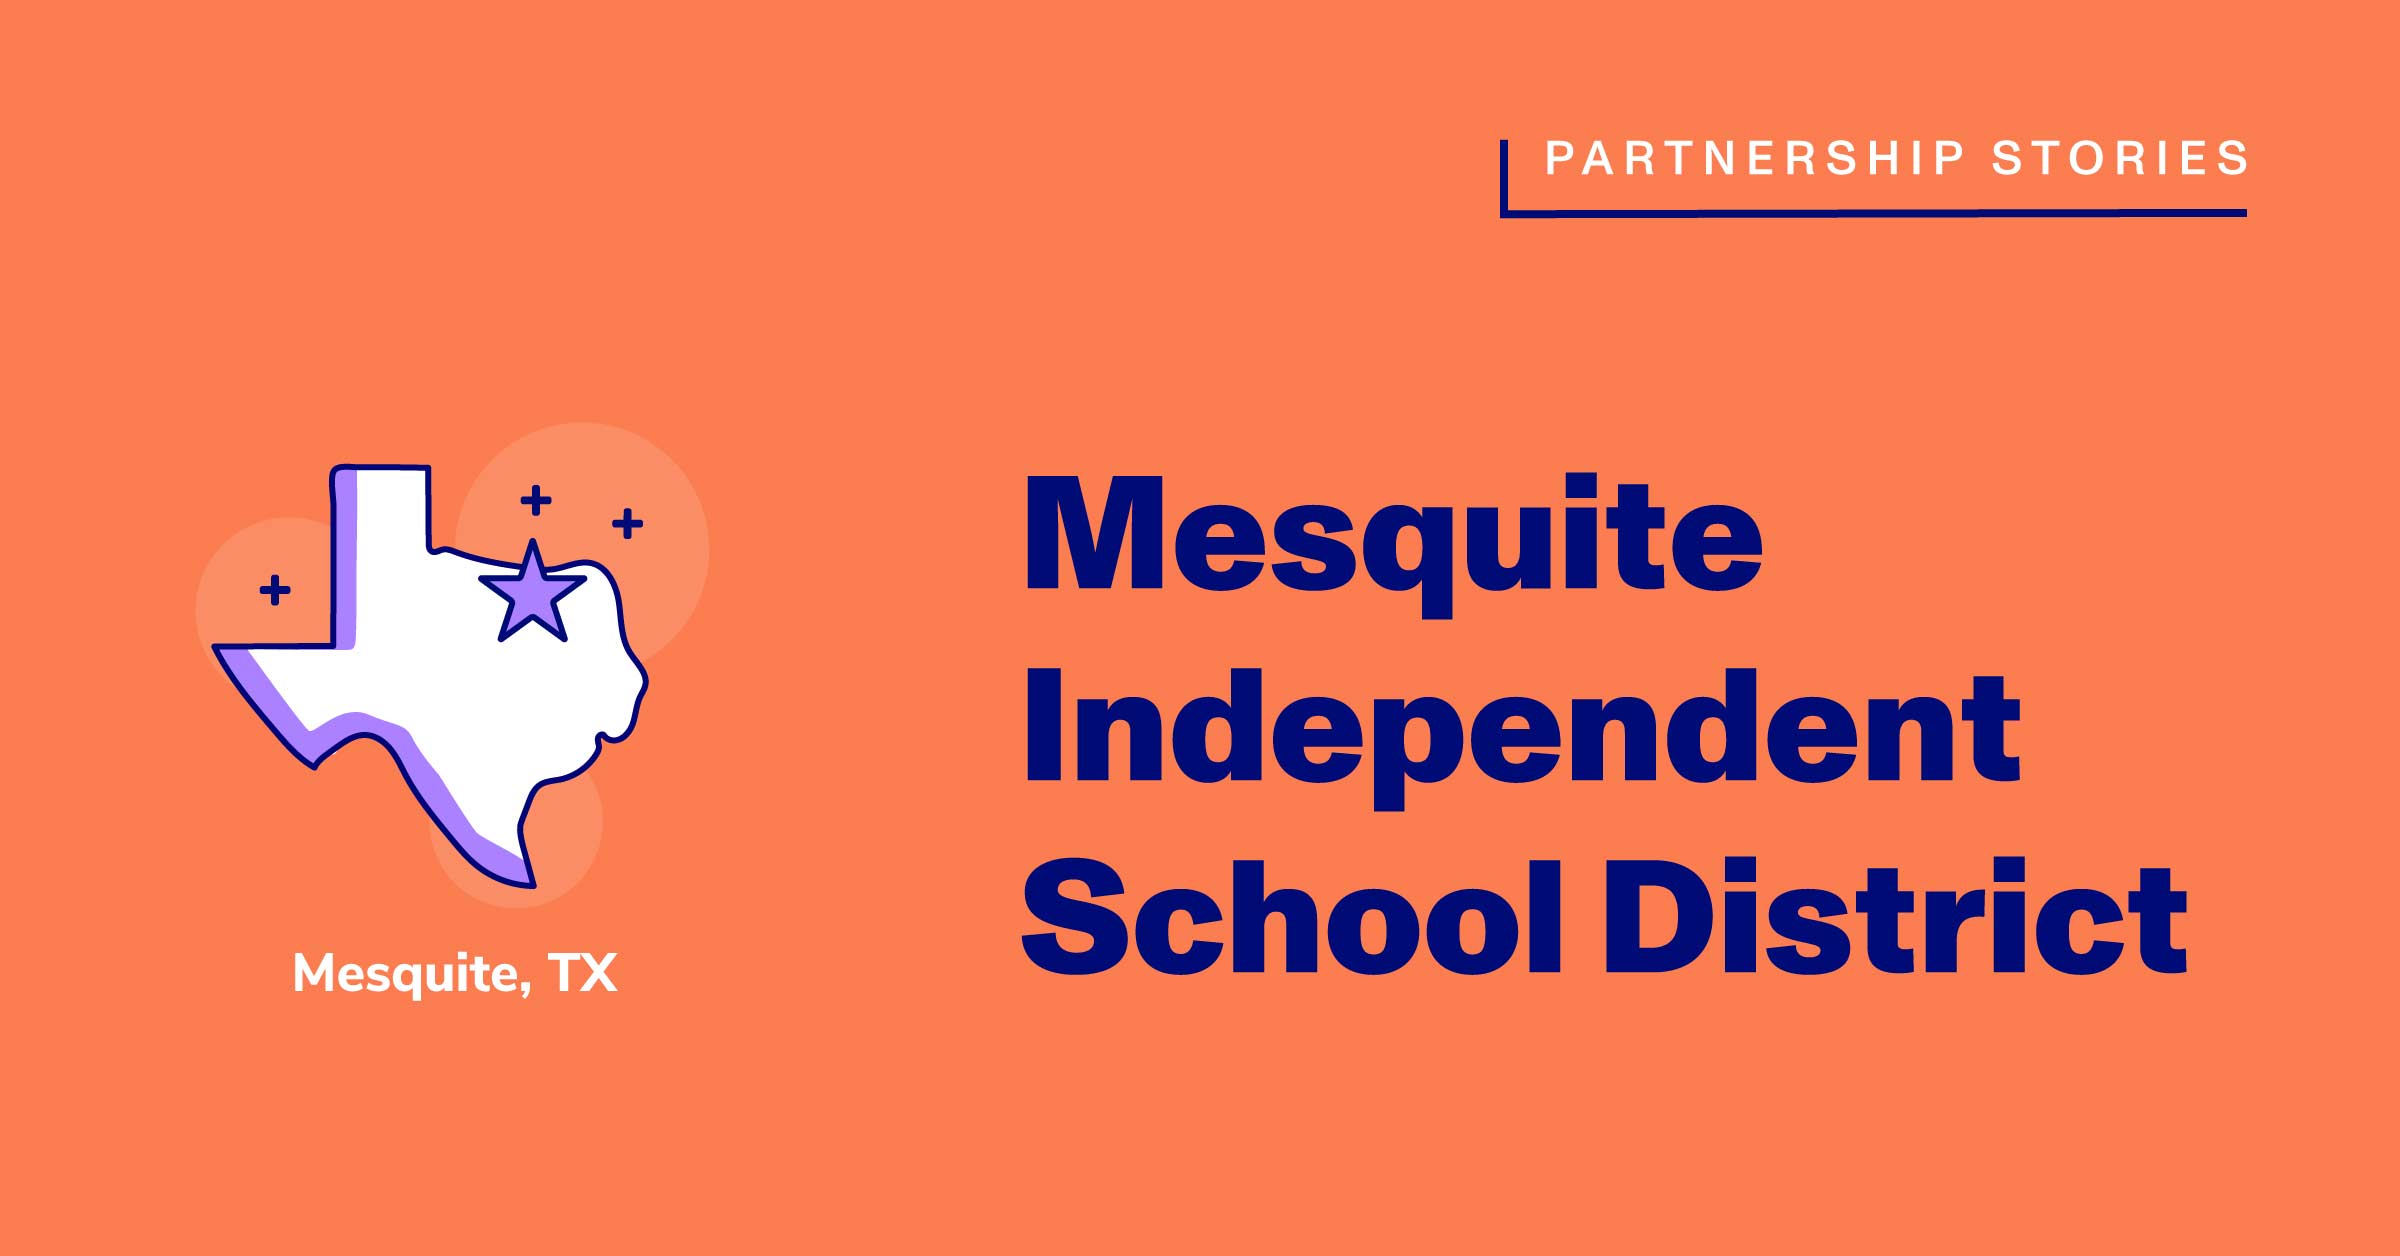 Mesquite Independent School District: Mesquite, Texas